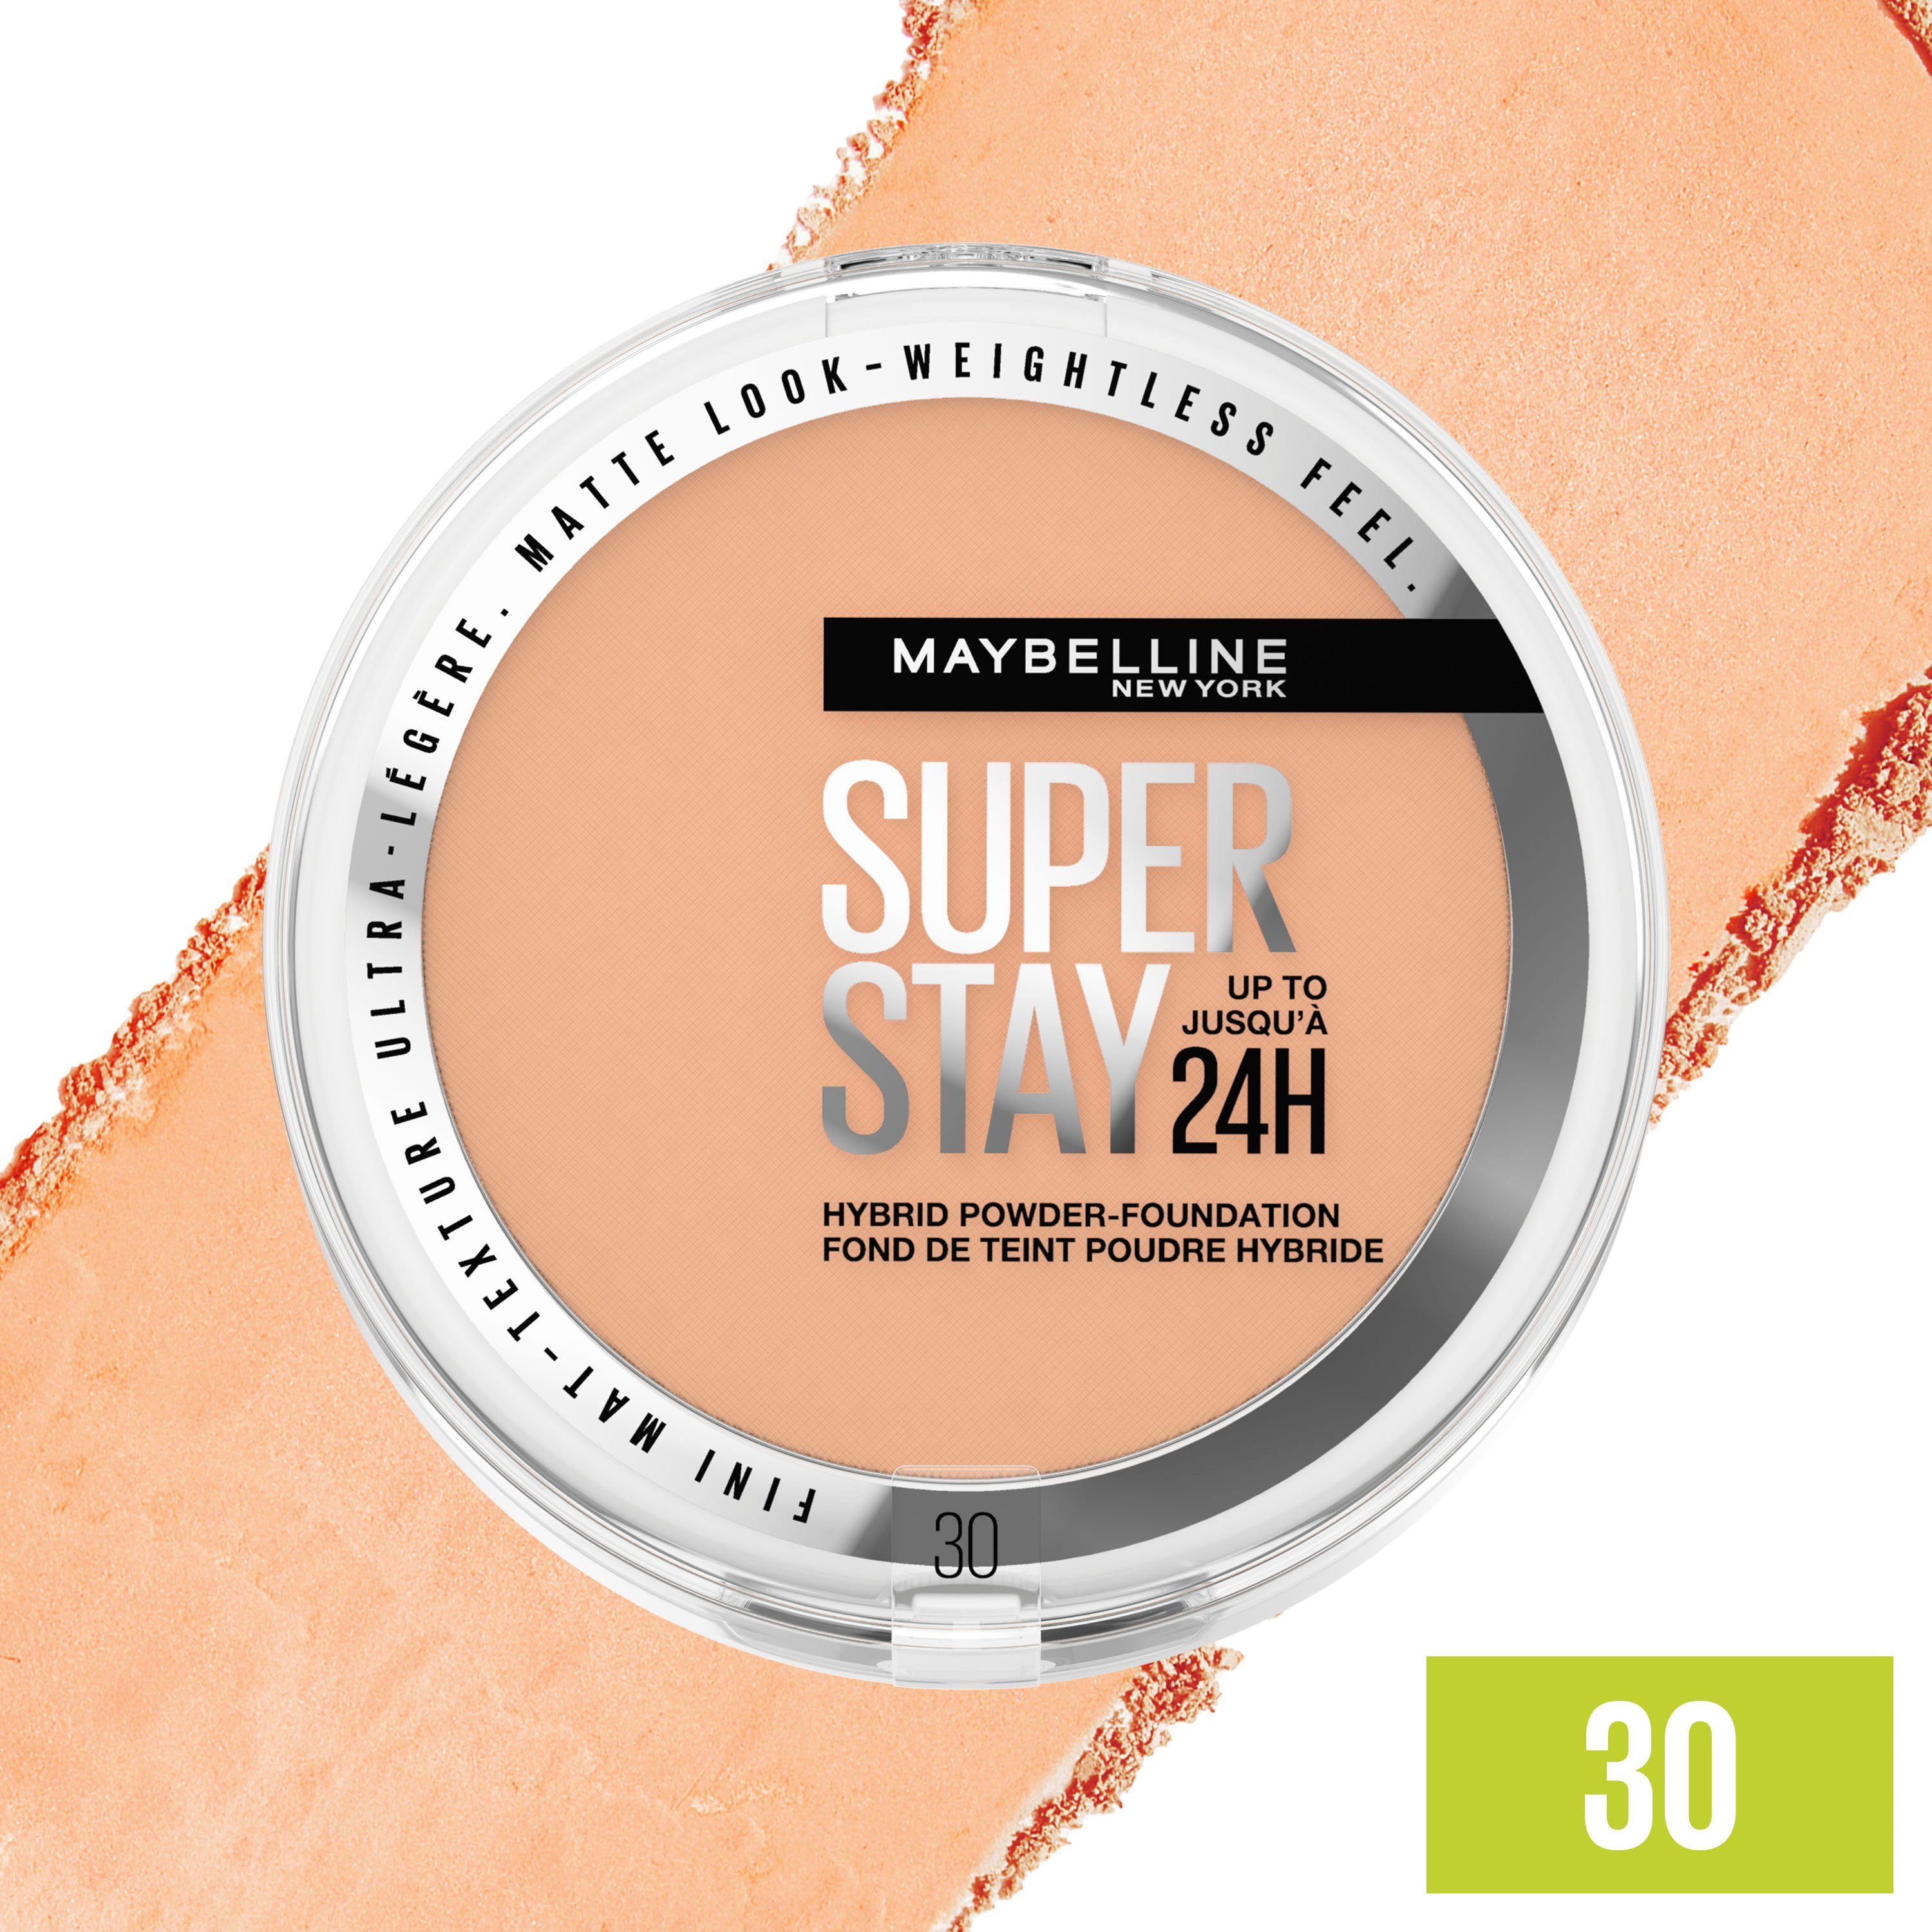 Puder Super YORK York Maybelline Foundation Stay Hybrides MAYBELLINE New Make-Up NEW